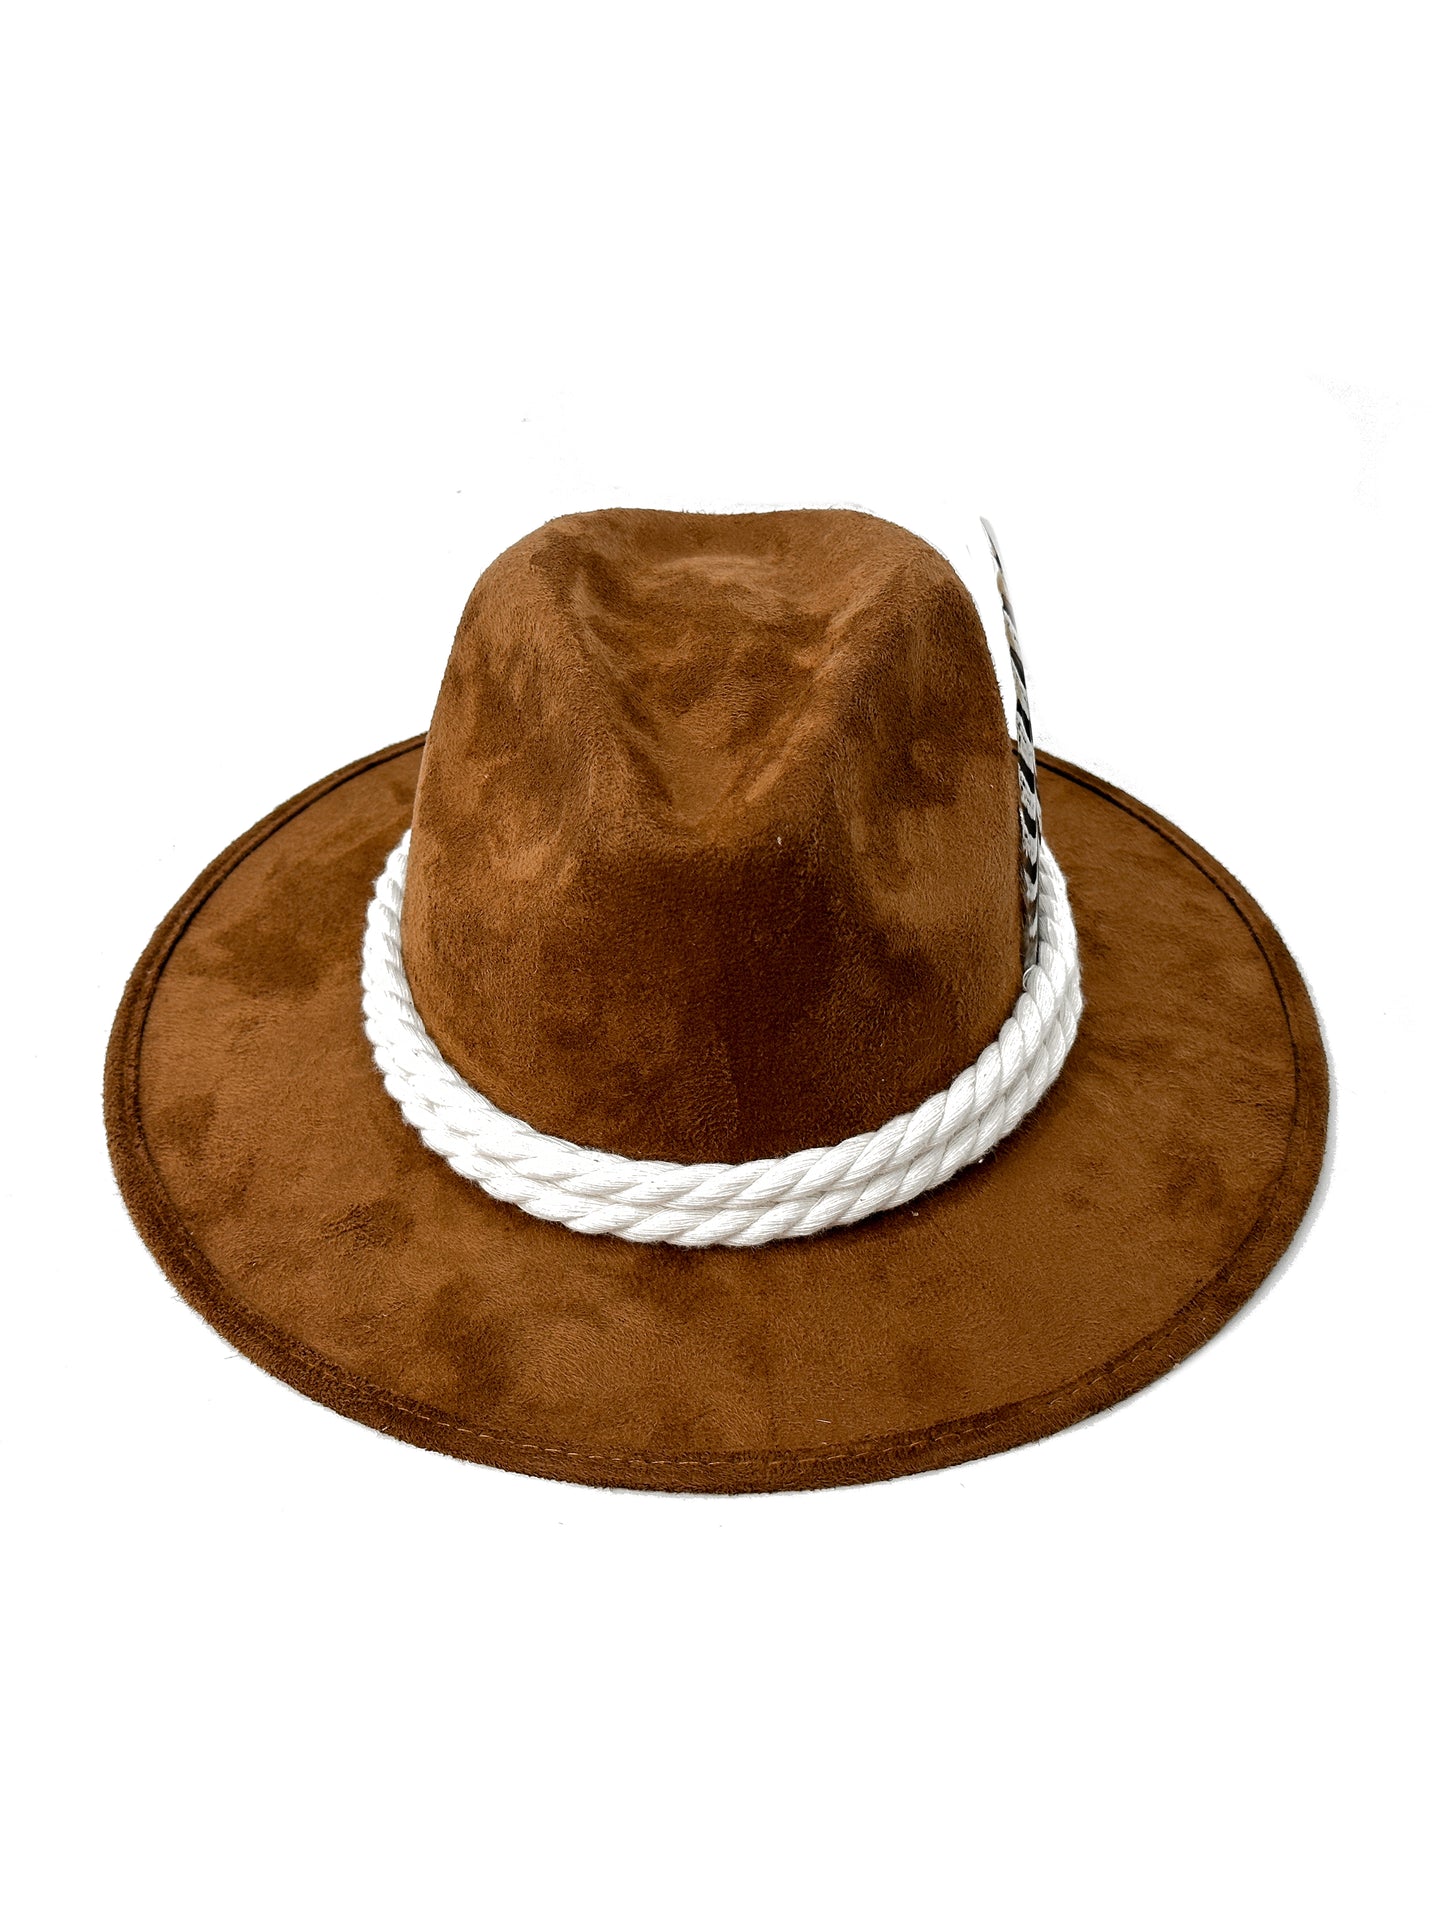 BROWN SUEDE HAT